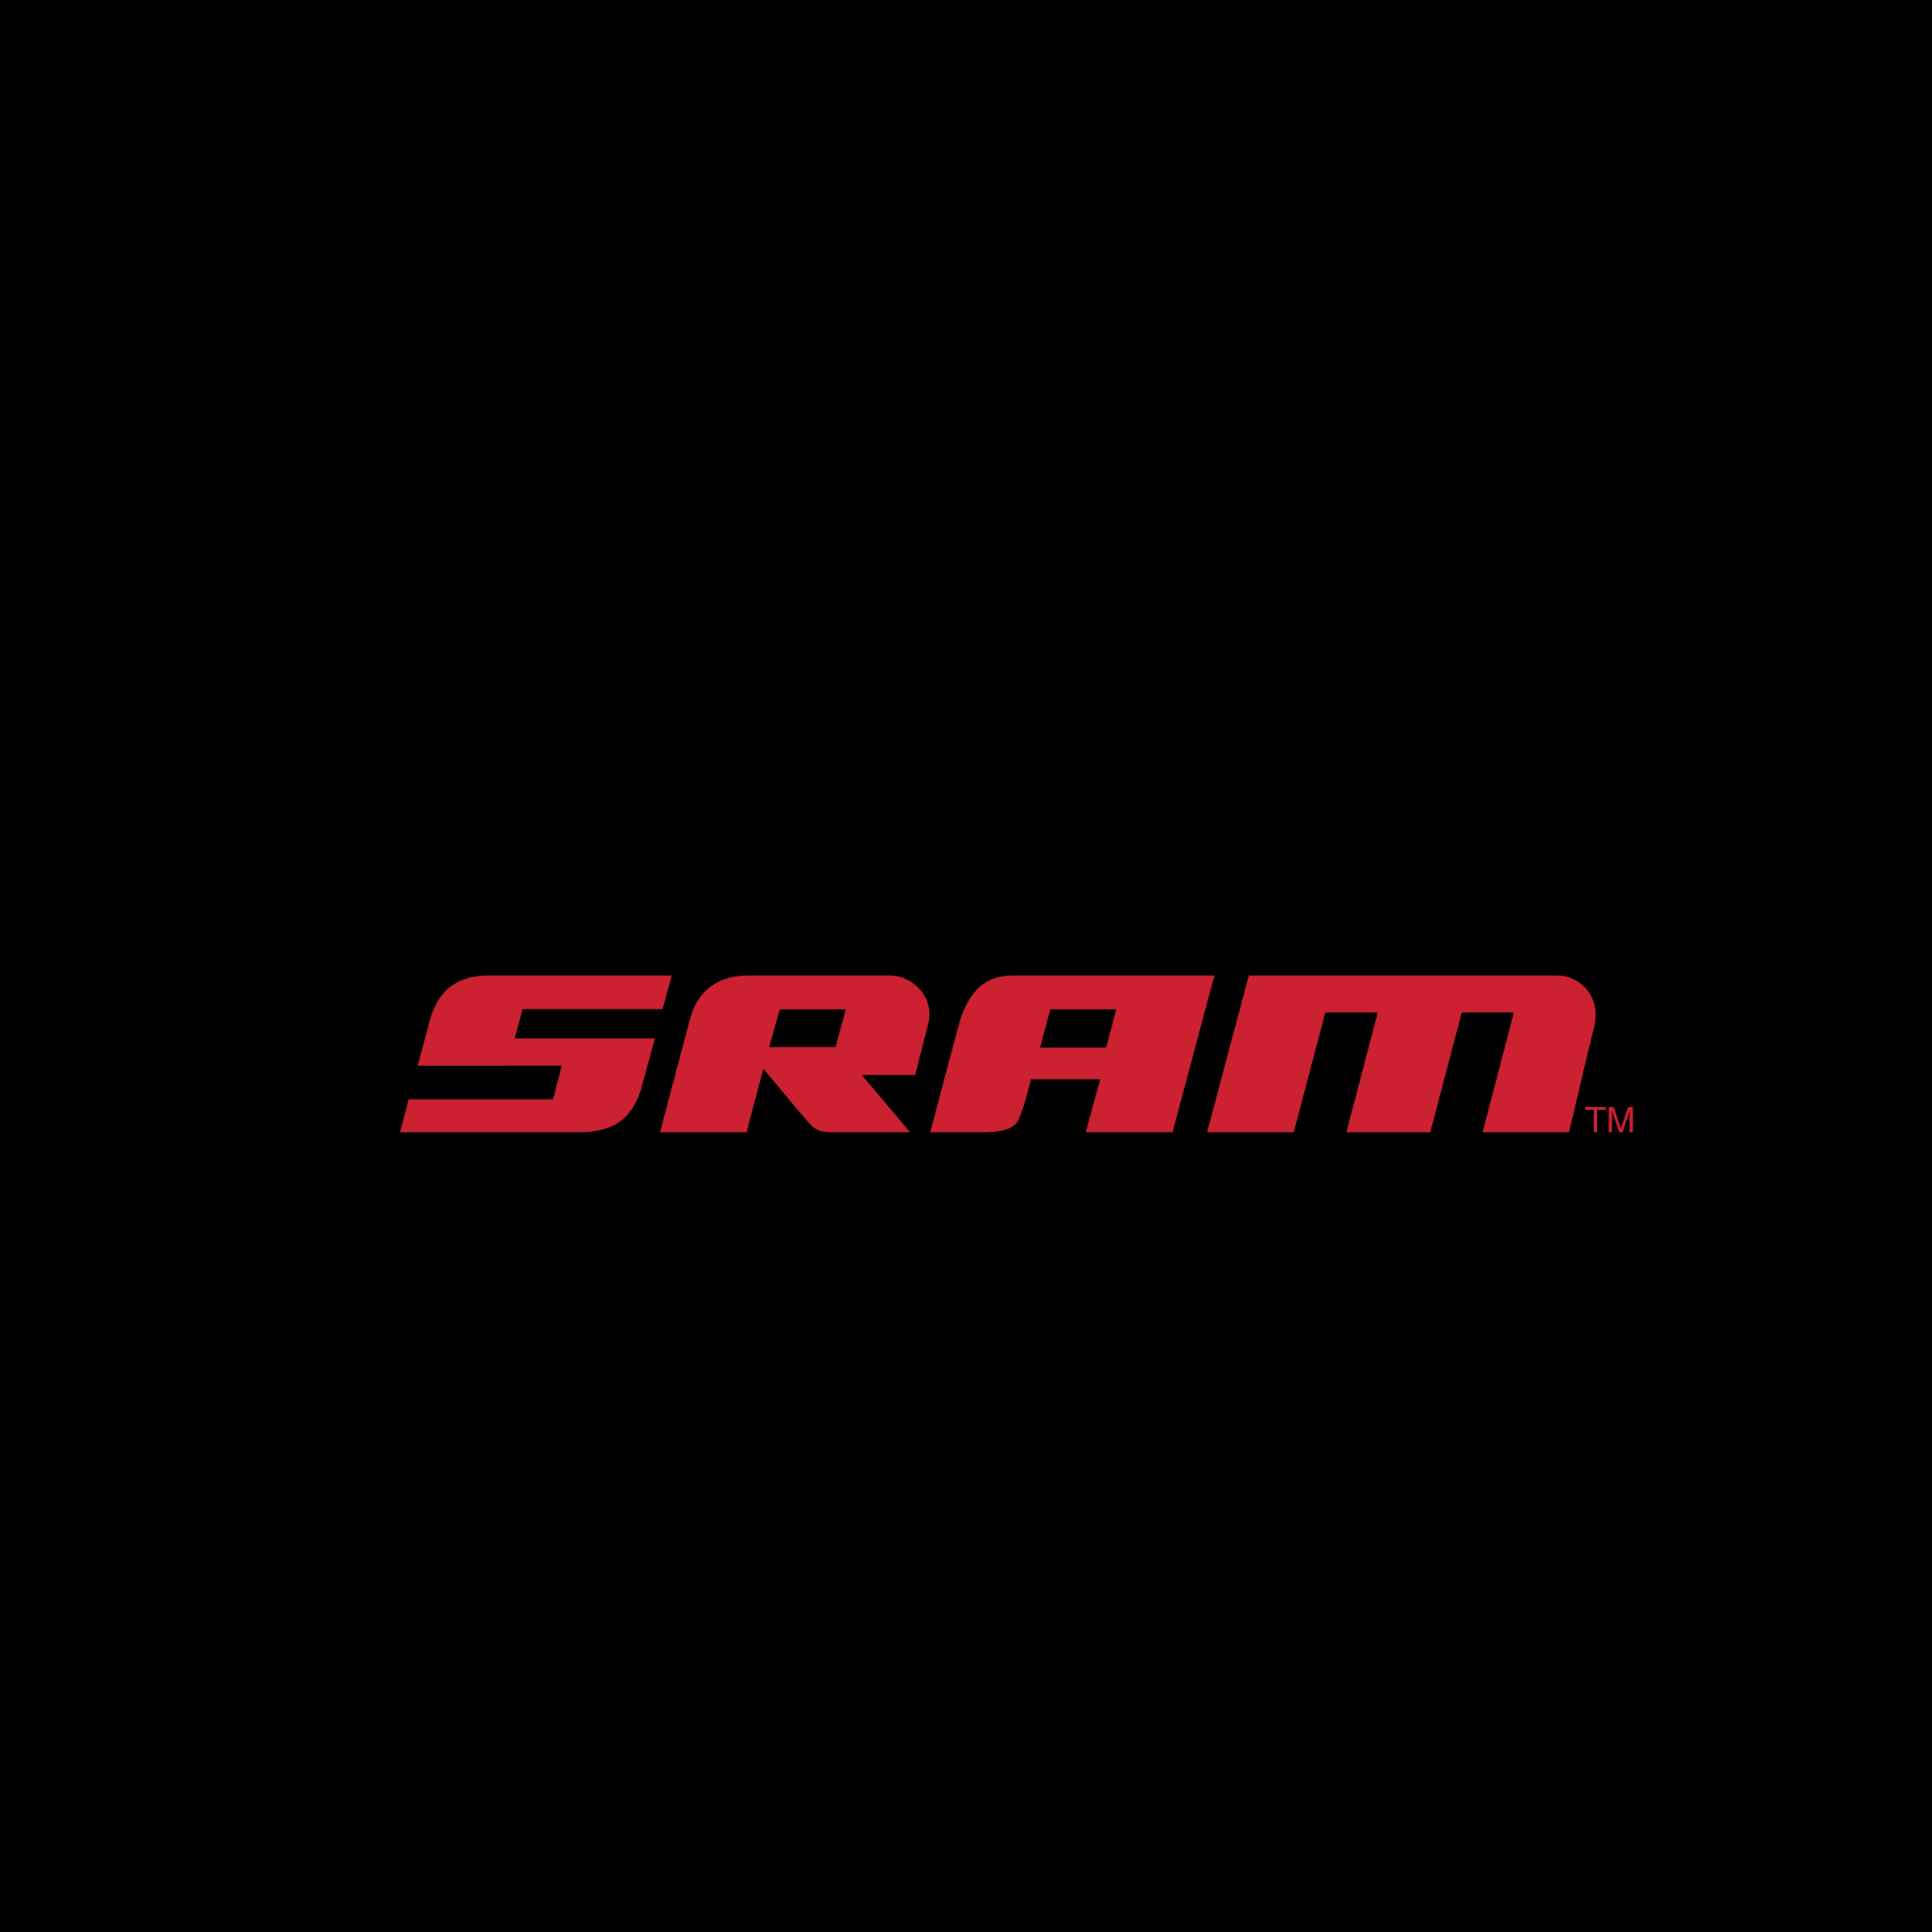 SRAM Logo - SRAM Logo PNG Transparent & SVG Vector